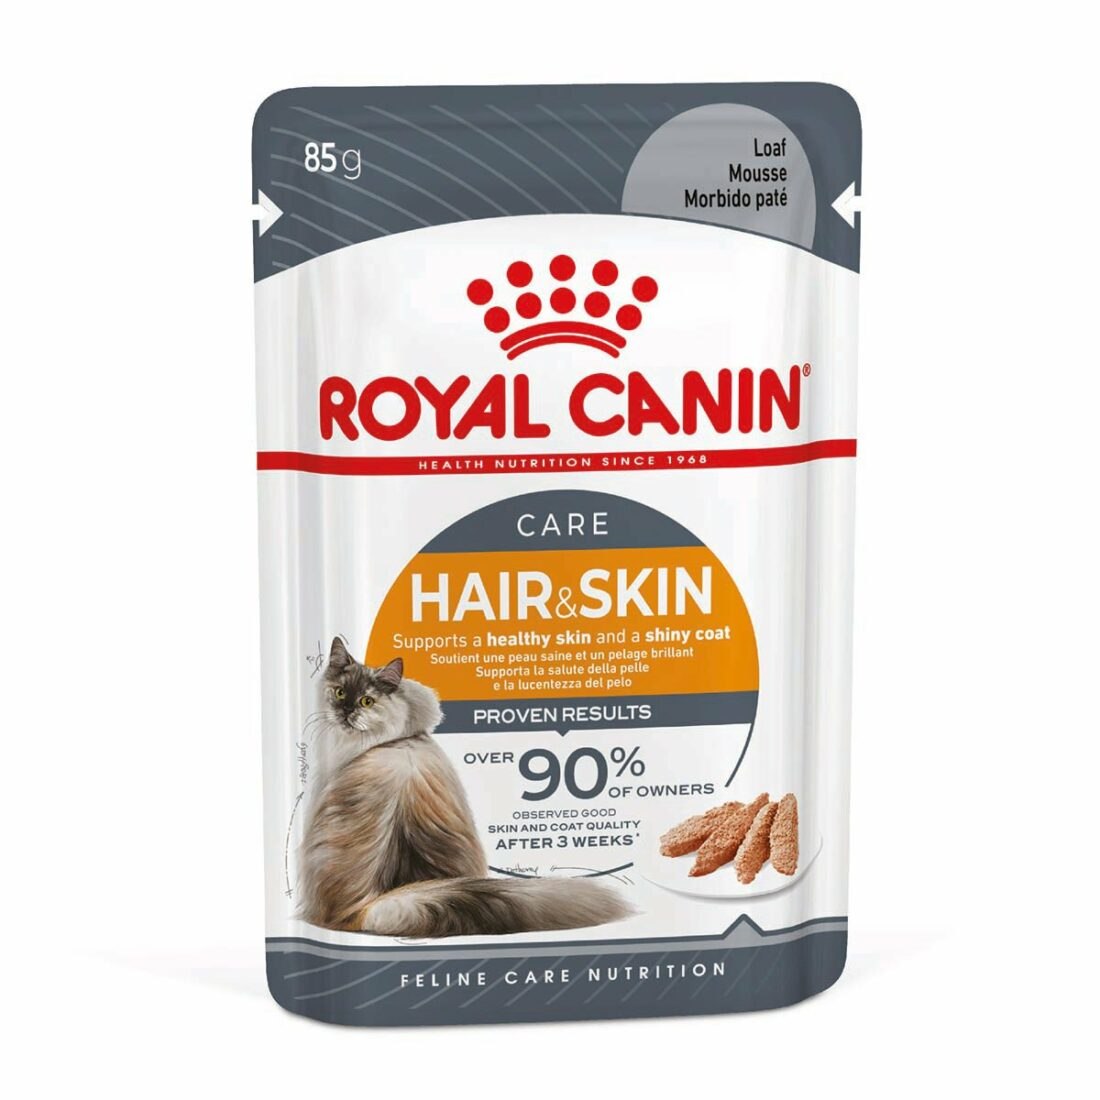 Royal Canin FCN Hair & Skin Loaf